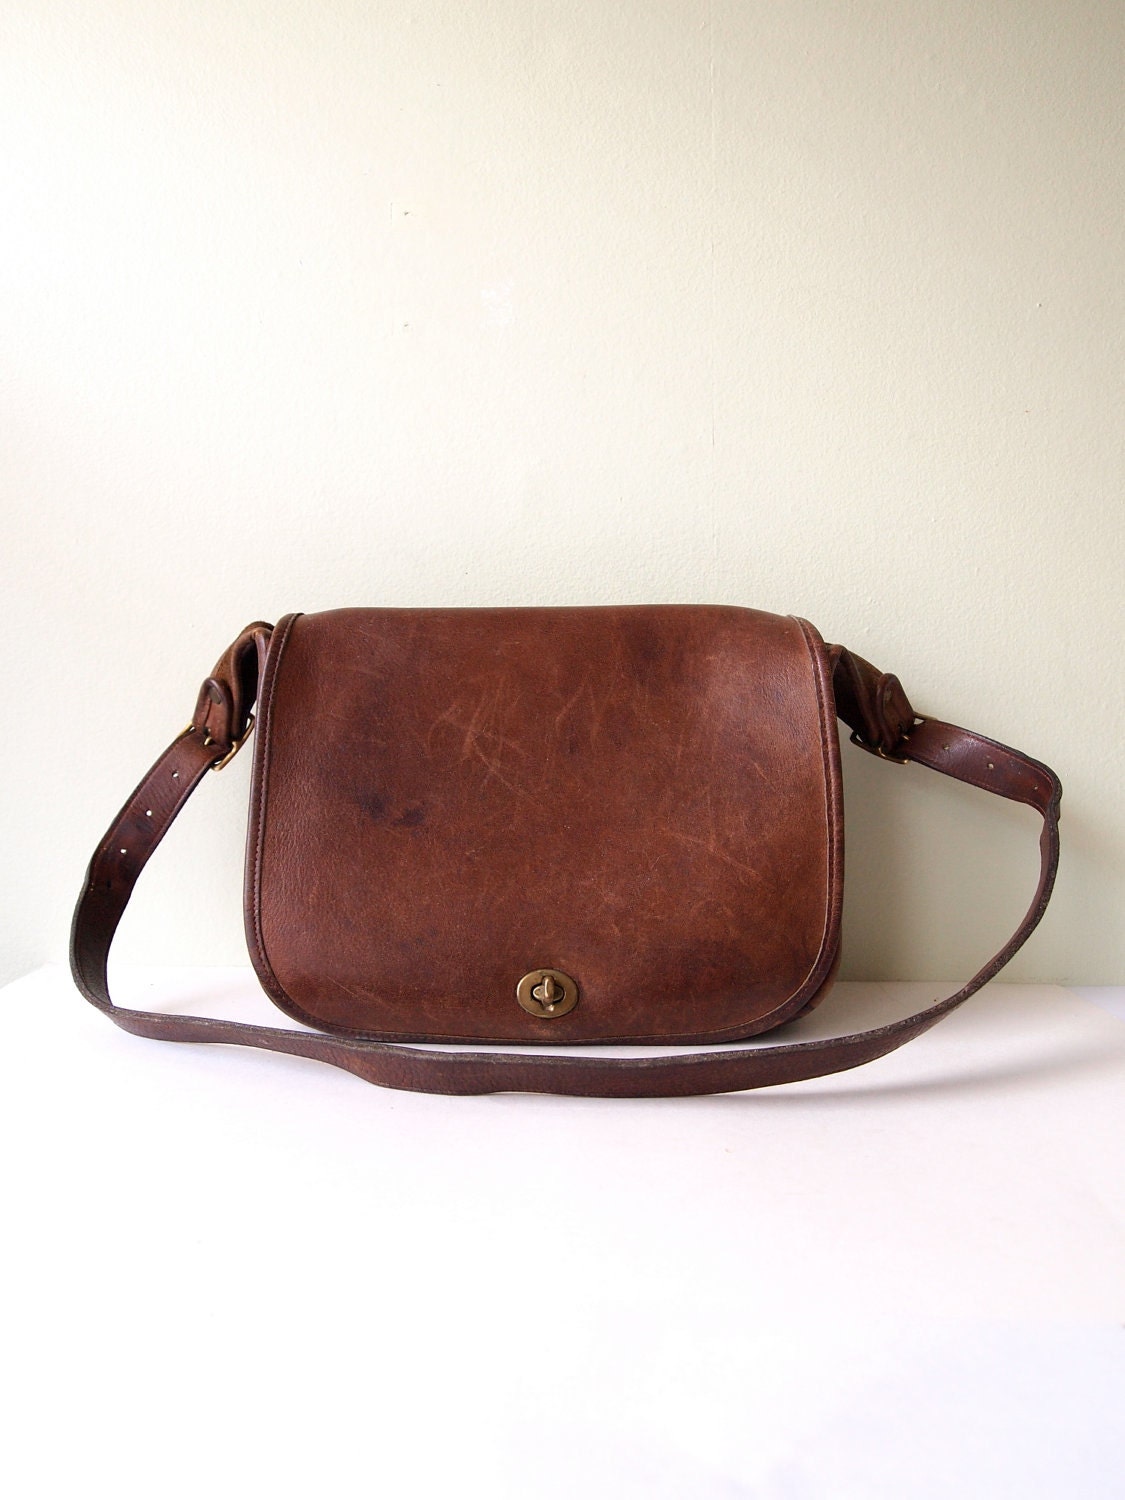 Vintage COACH Saddle Bag NYC in Chocolate Brown